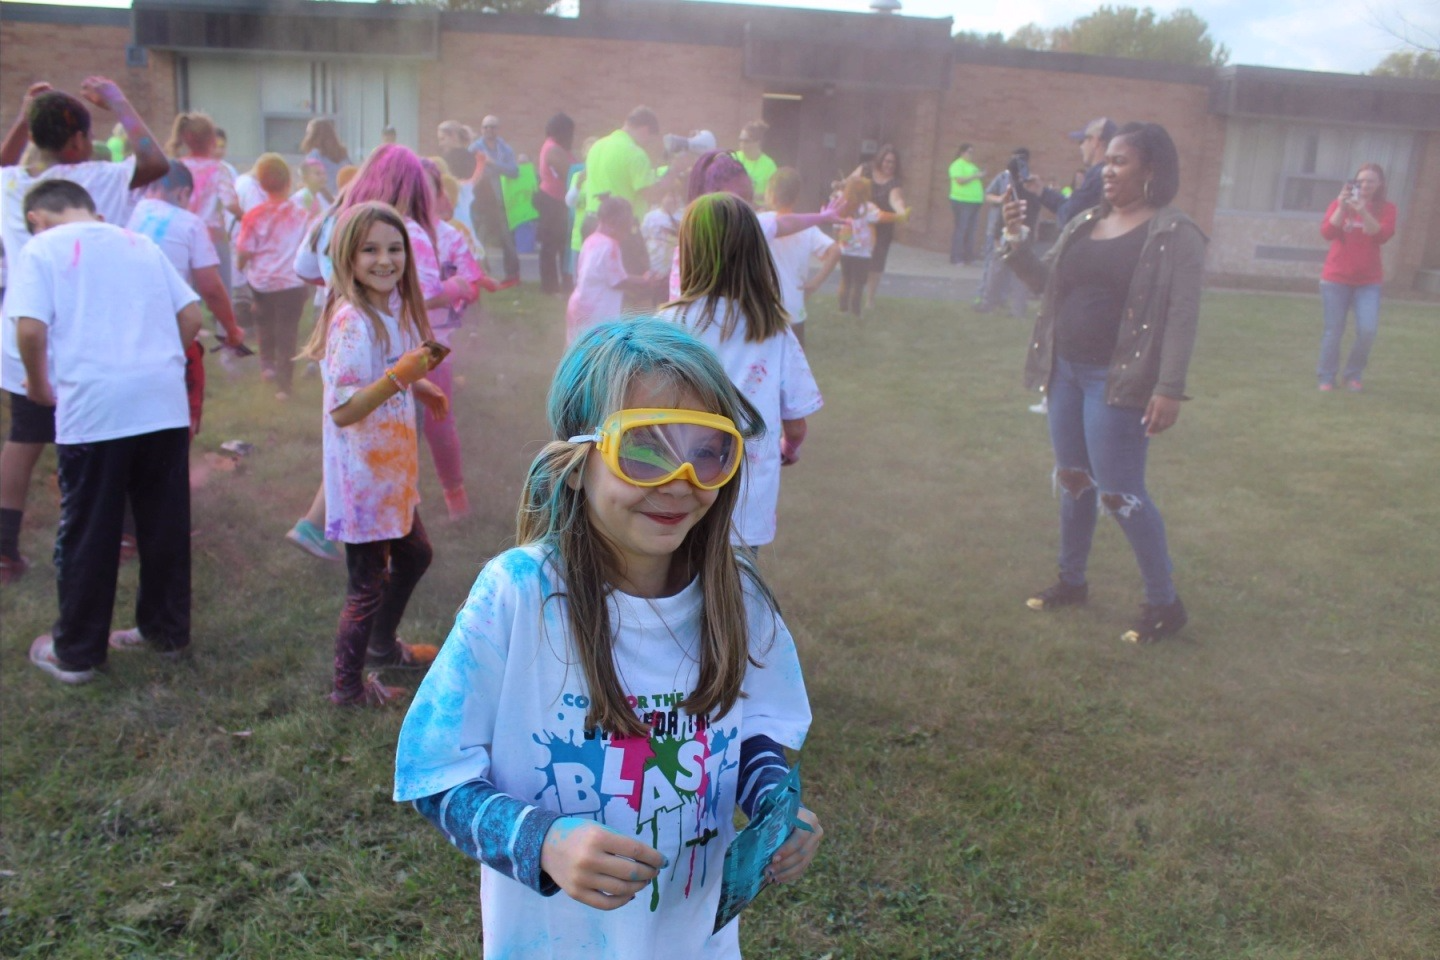 Color Run Fun Photos and Celebration in the school